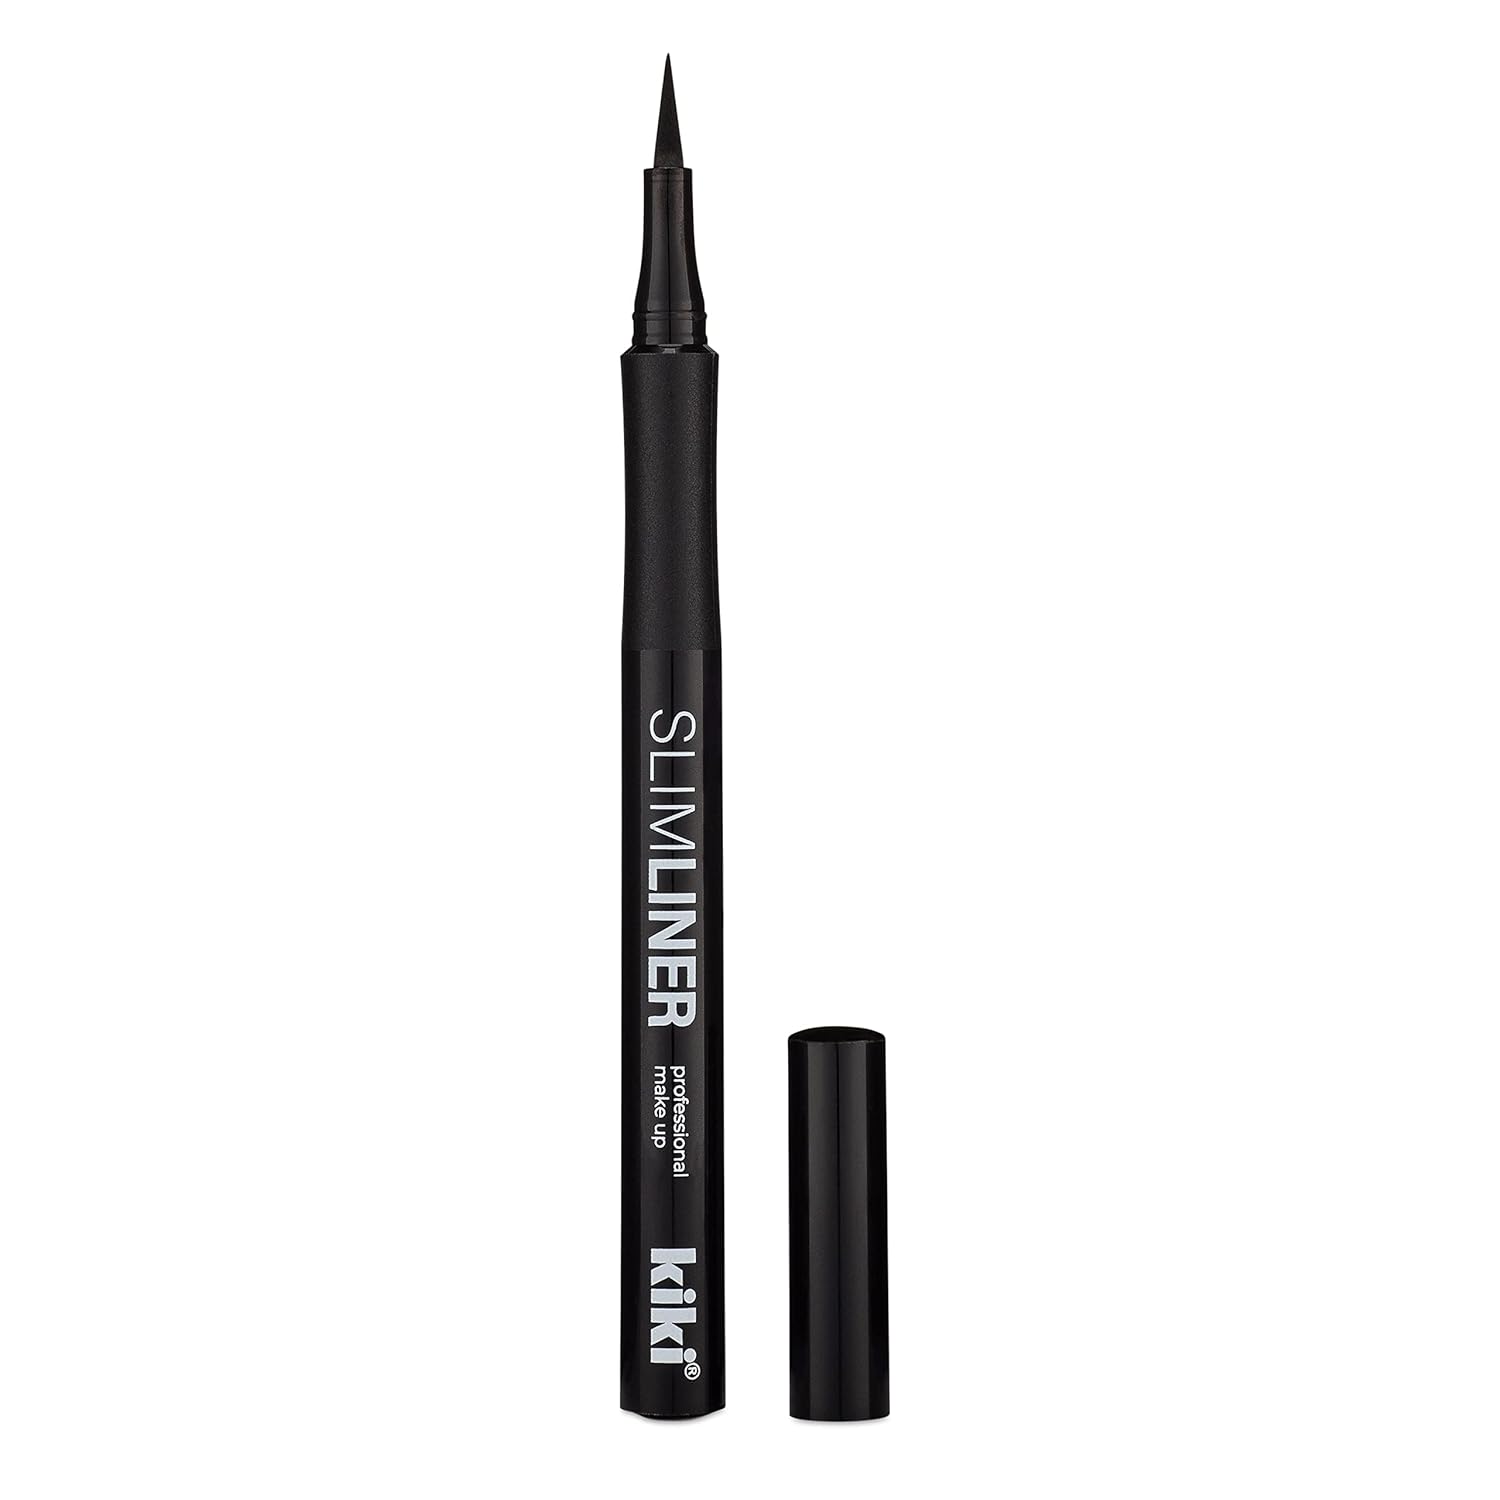 kiki Slimliner Liquid Eyeliner Pen Black, Smudge Proof All Day Vegan Formula, Cruelty Free